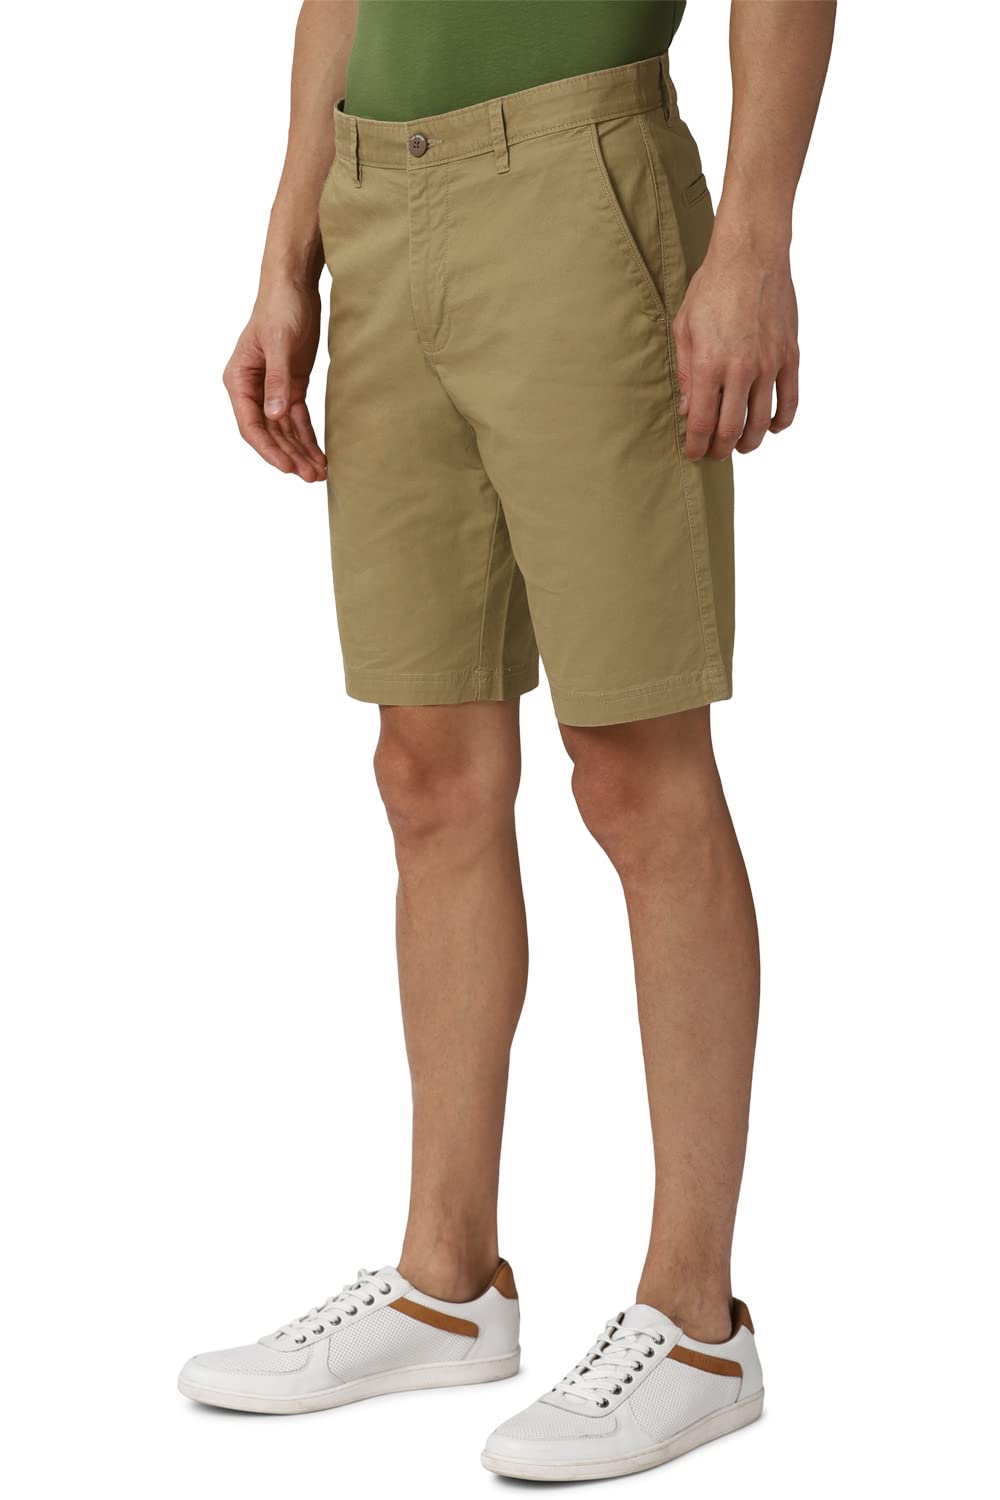 Van Heusen Men's Chino Shorts (VSSRWRGFP64304_Khaki_XL)